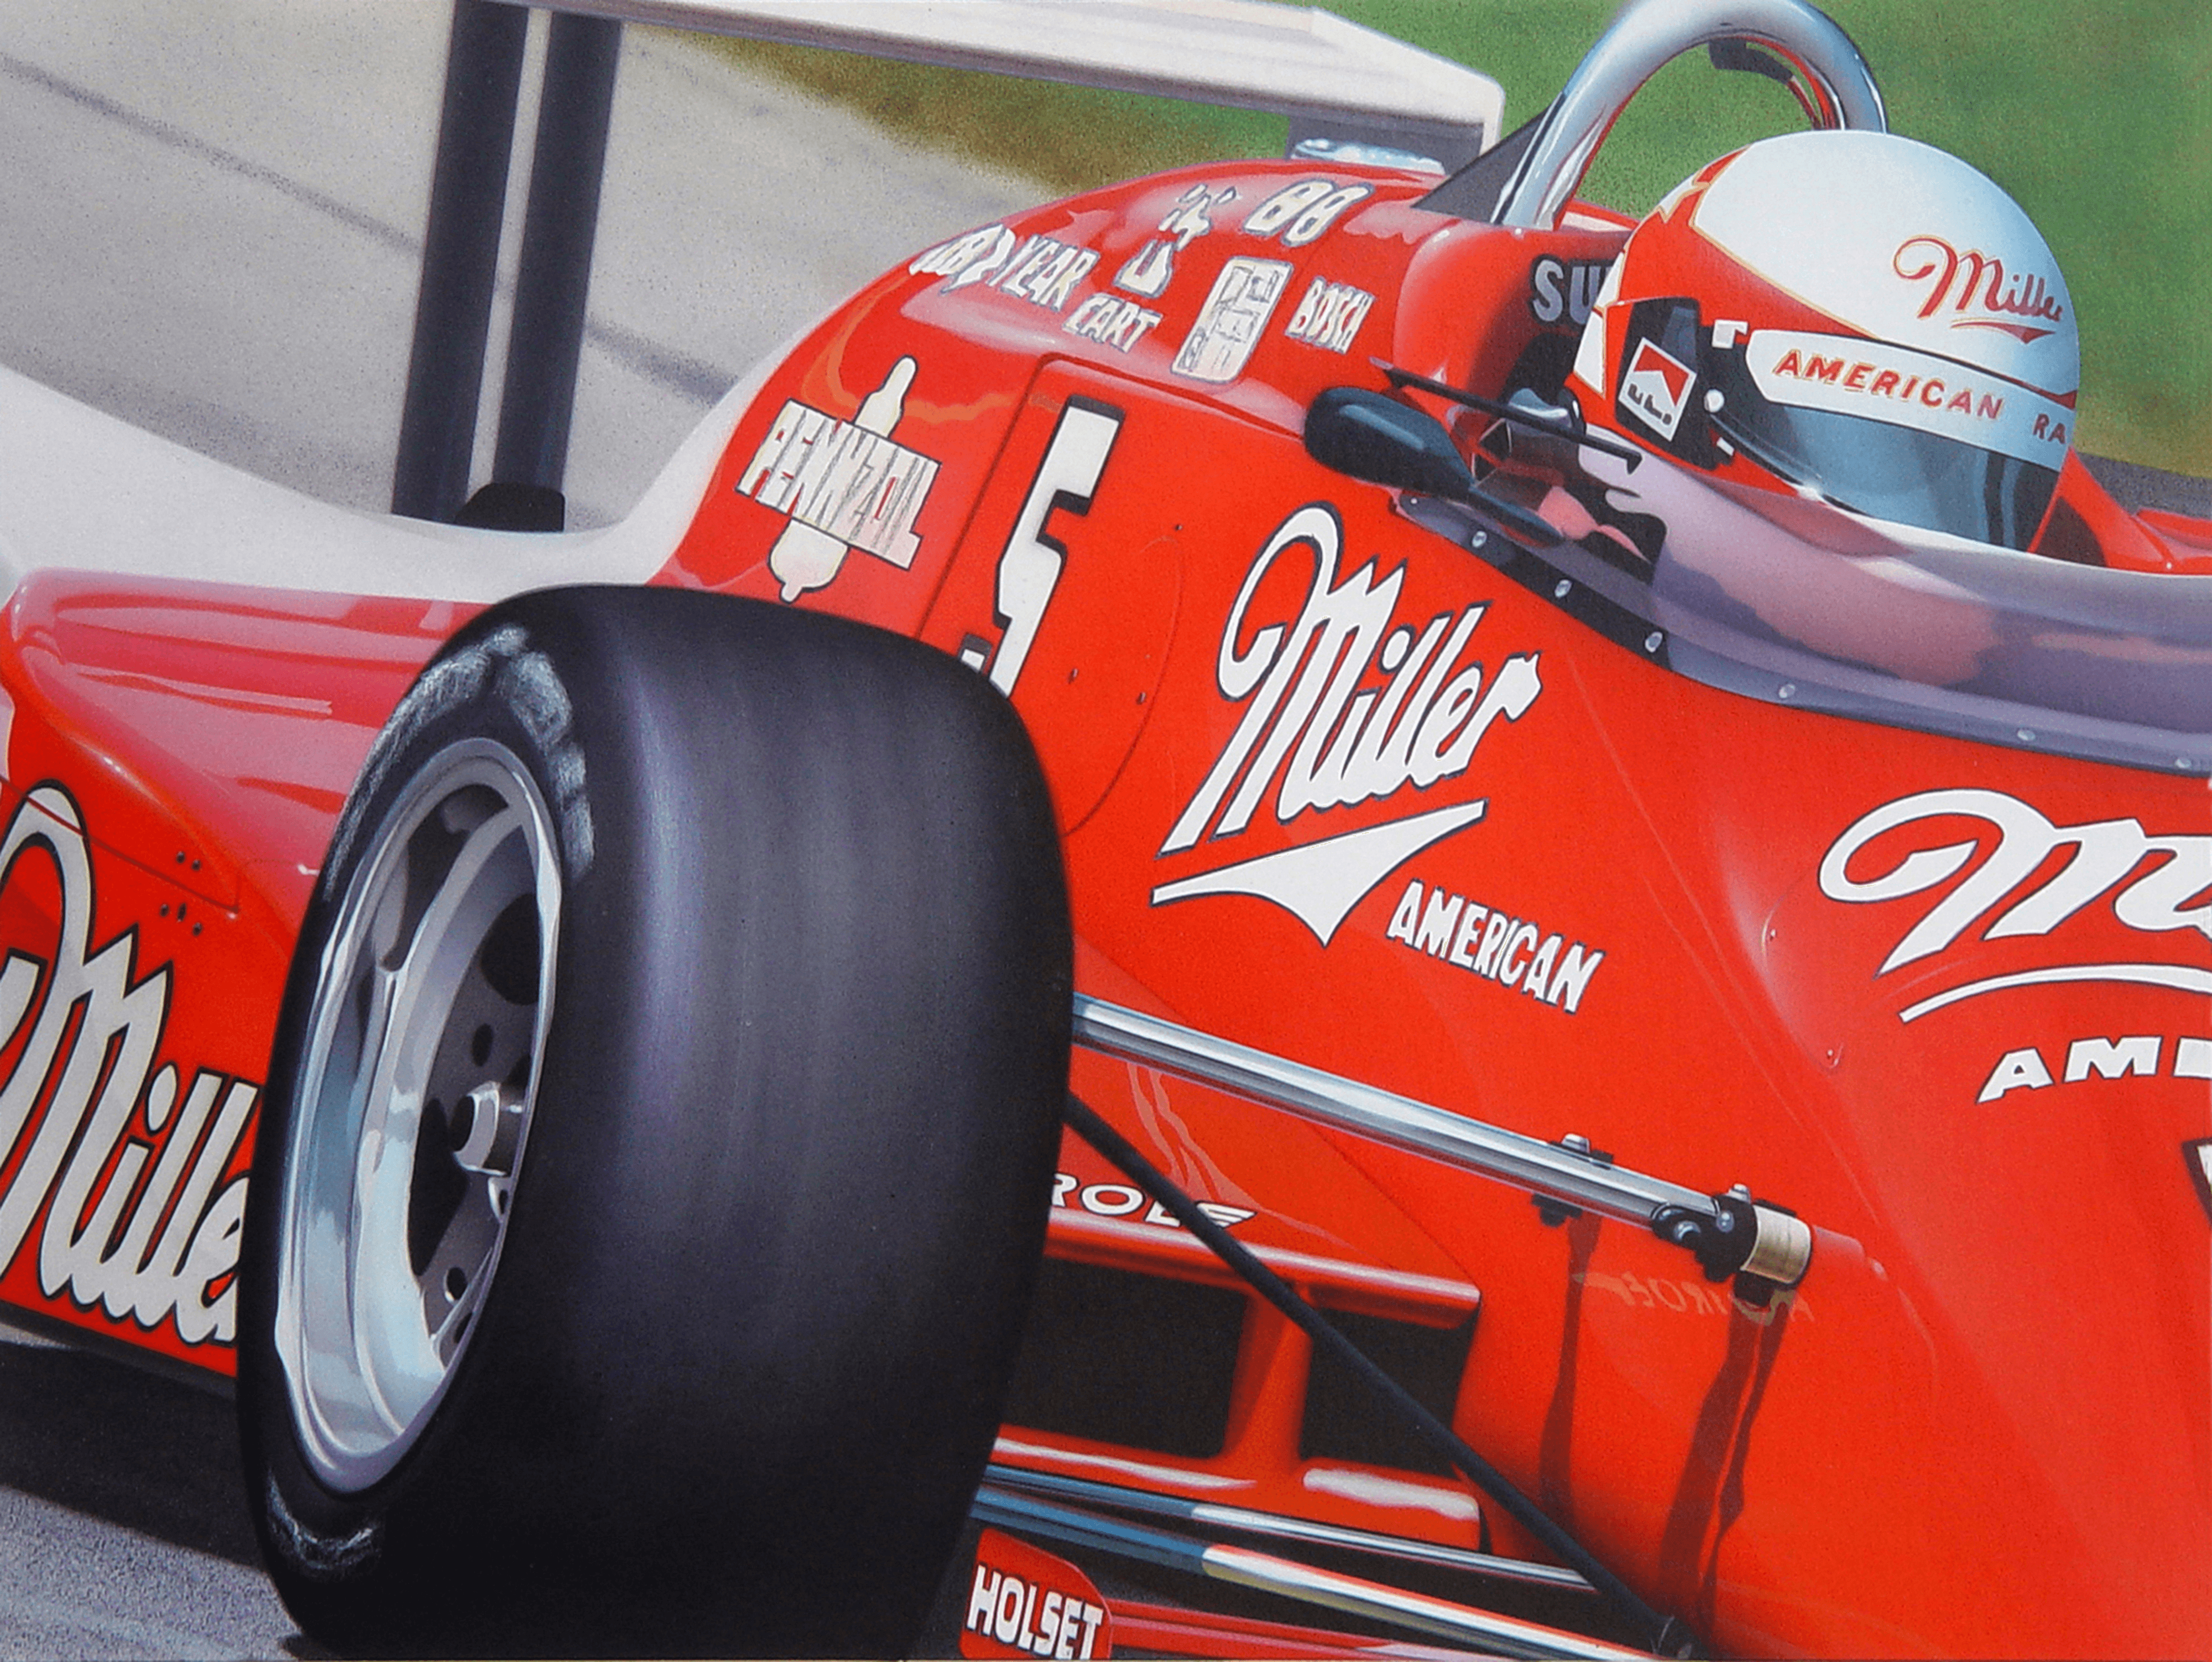 Formula One Miller American Ad Campaign by MadMen Artist Joseph Milioto